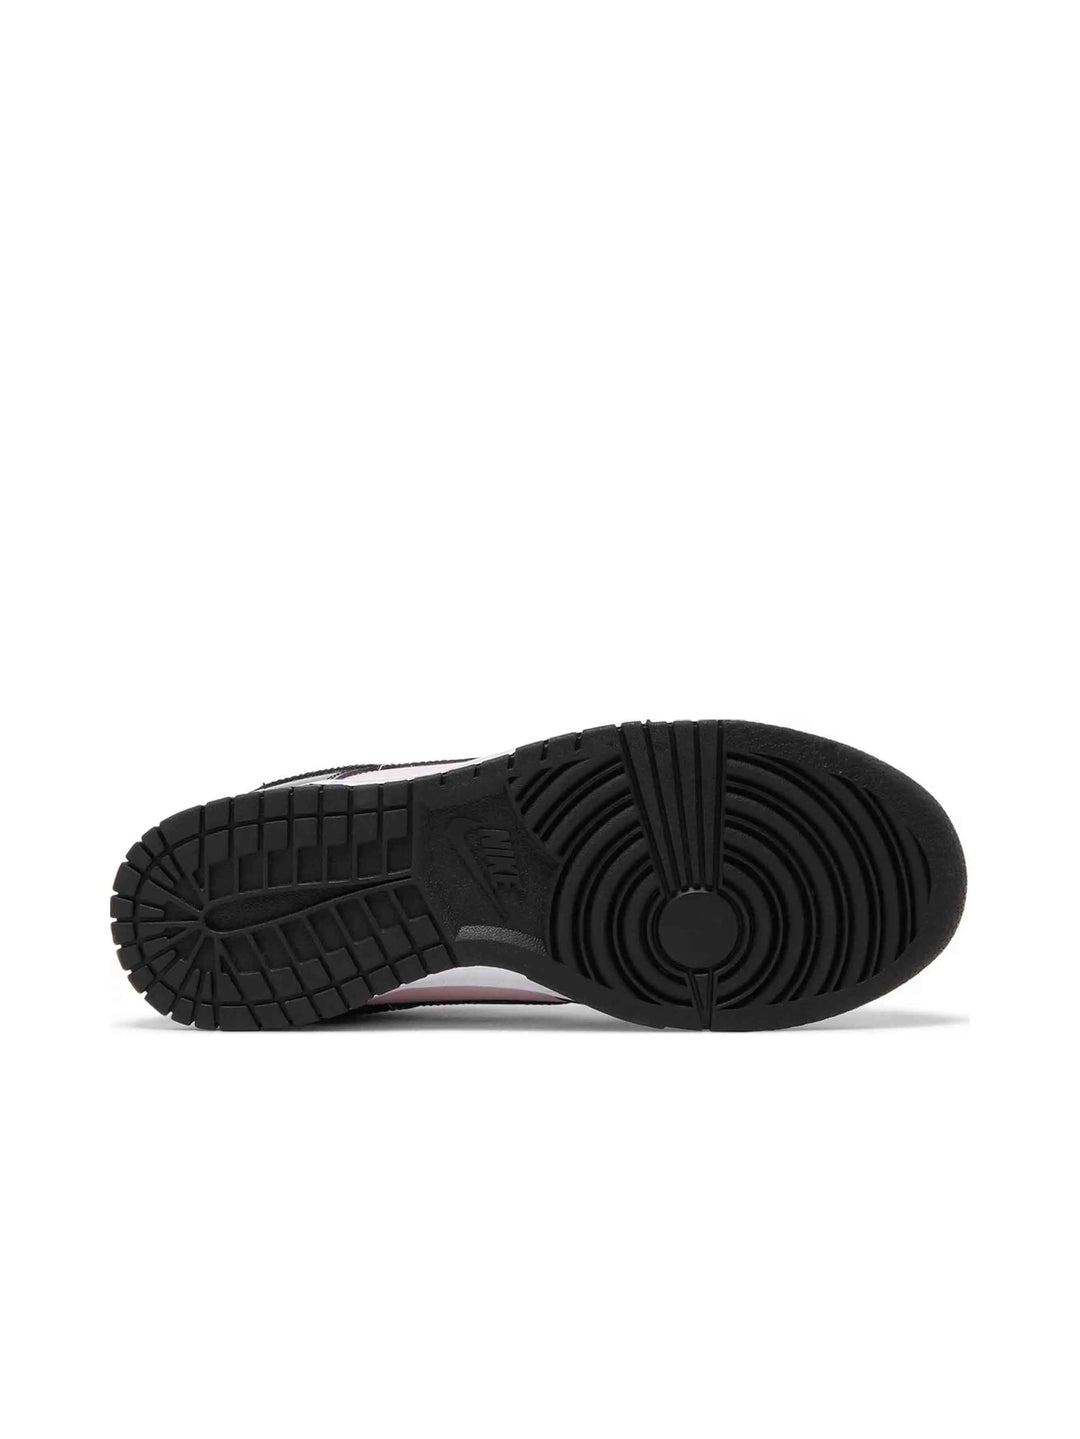 Nike Dunk Low Pink Foam Black (W) - Prior